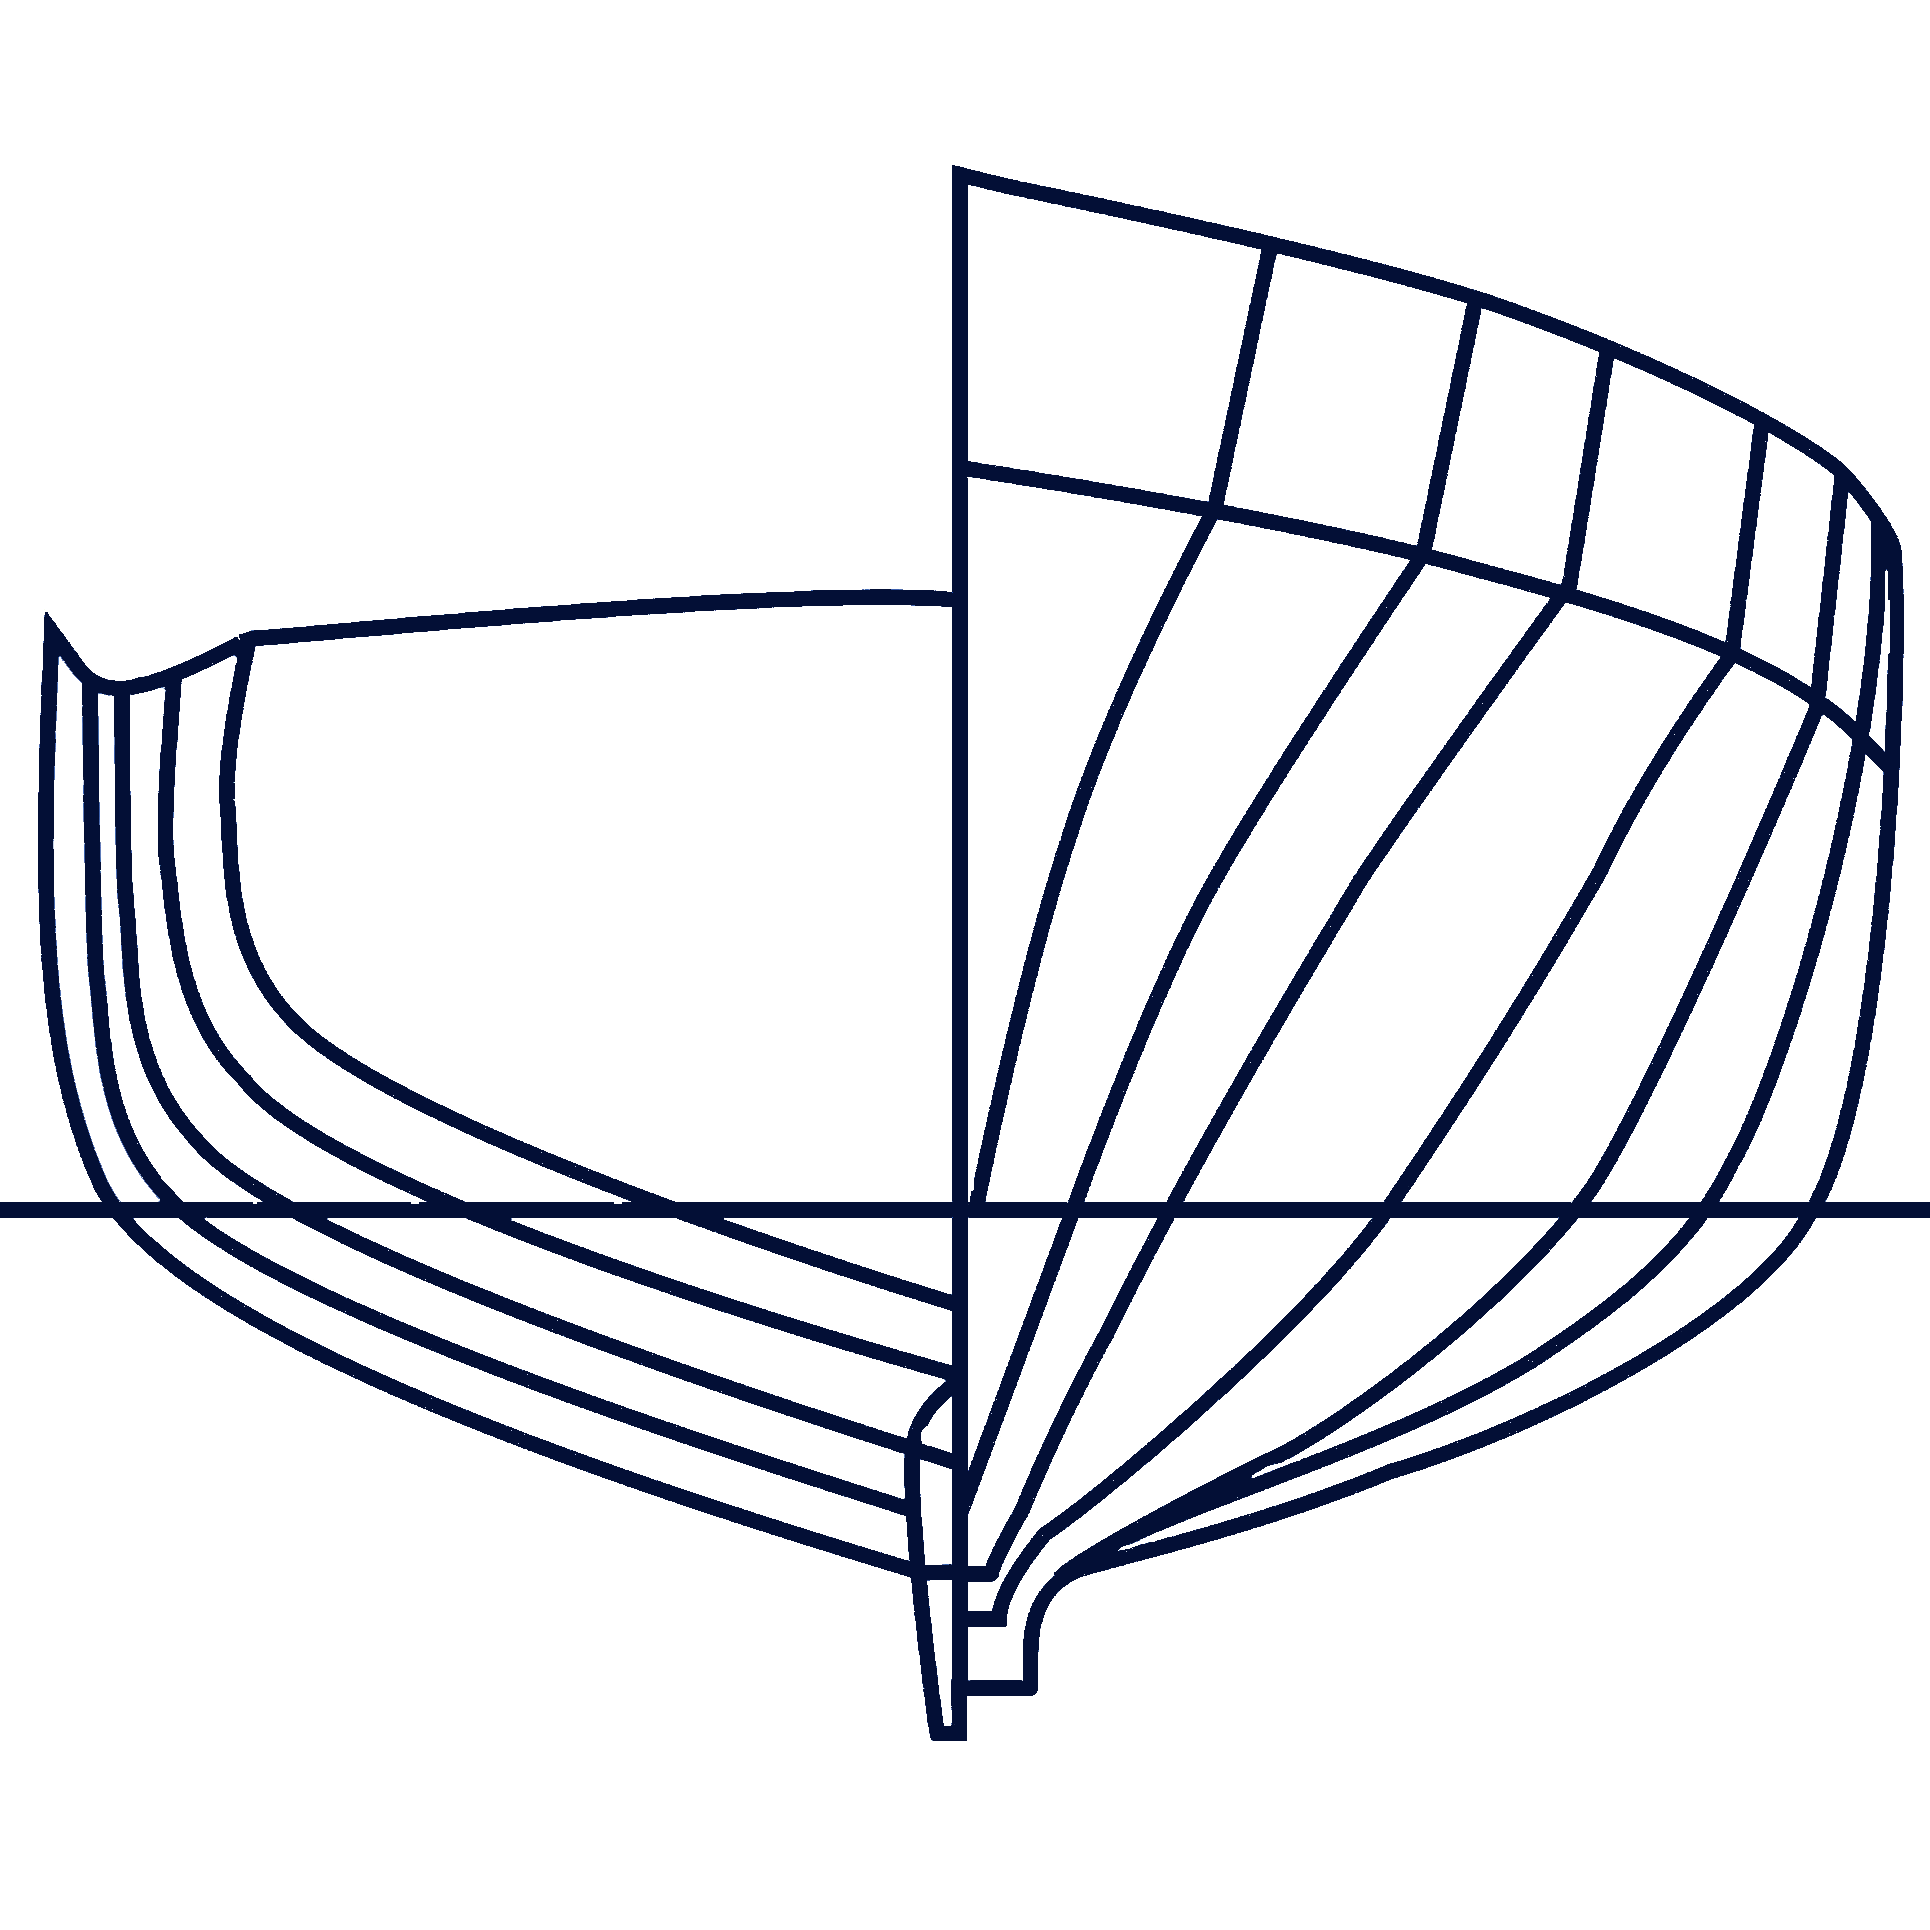 Kadey-Krogen logo